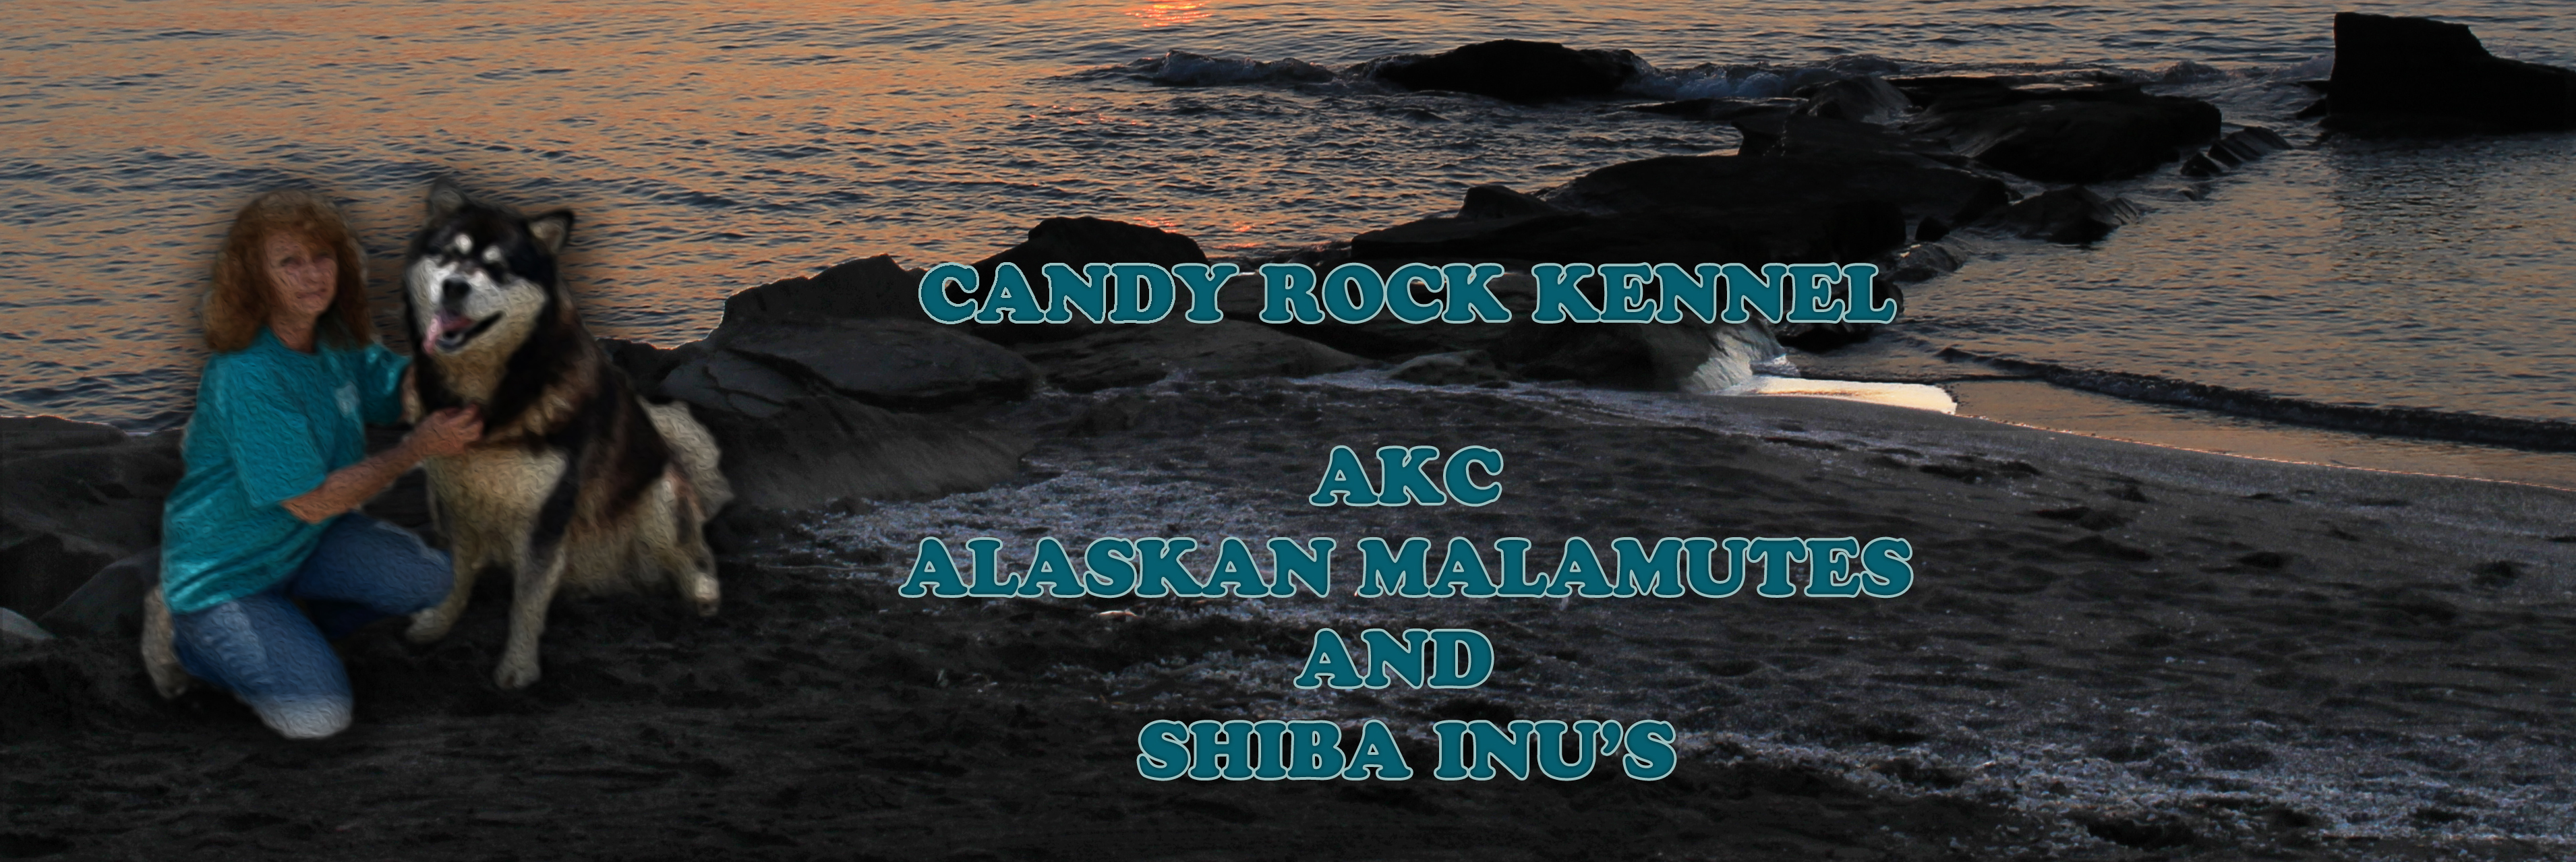 Candy Rock Kennel AKC Alaskan Malamutes and Shiba Inu's